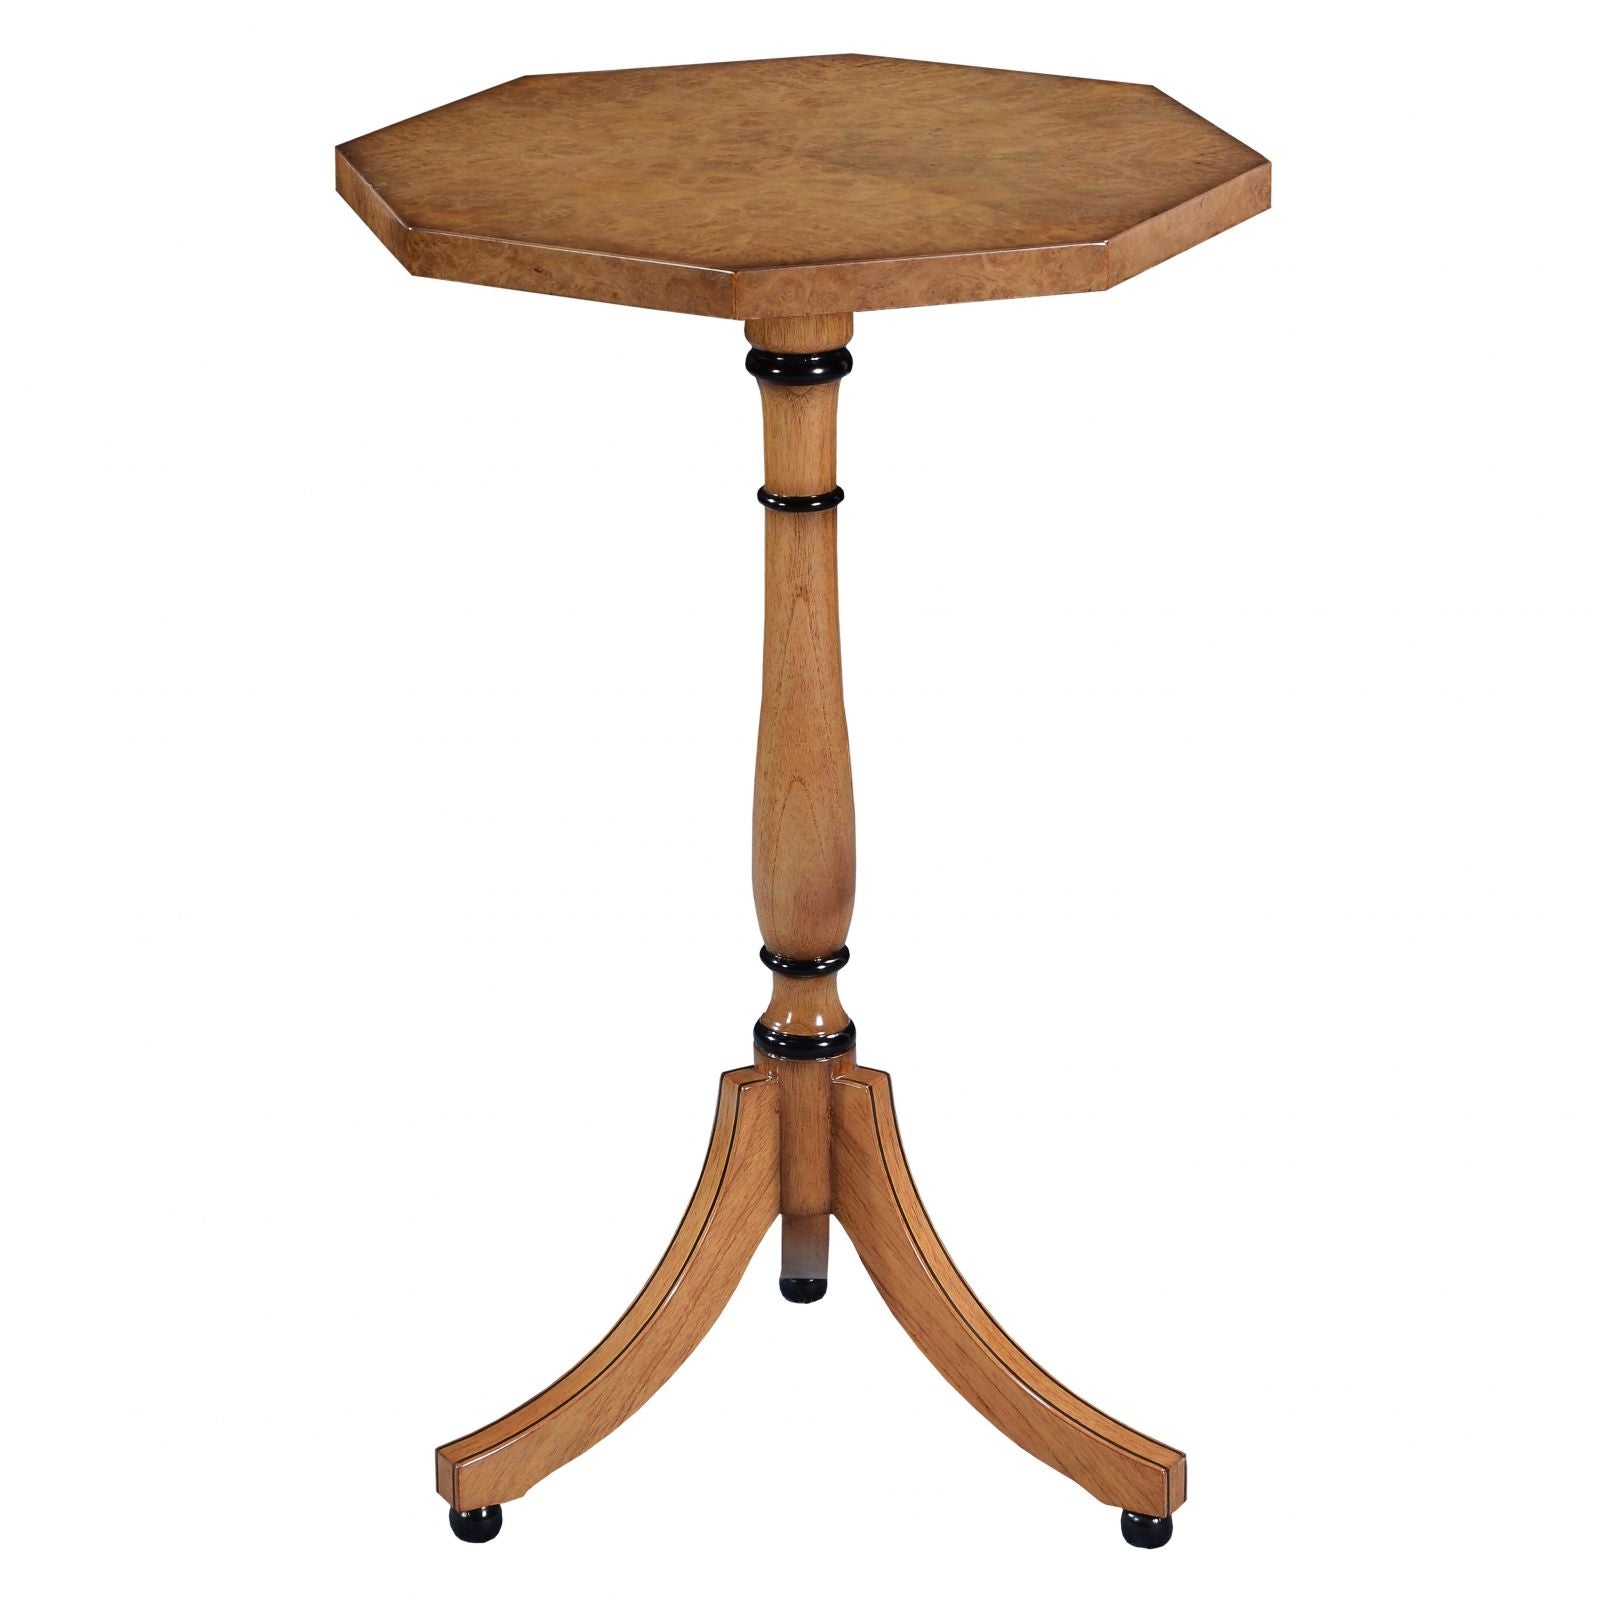 Octagonal wine table - Honey burr oak